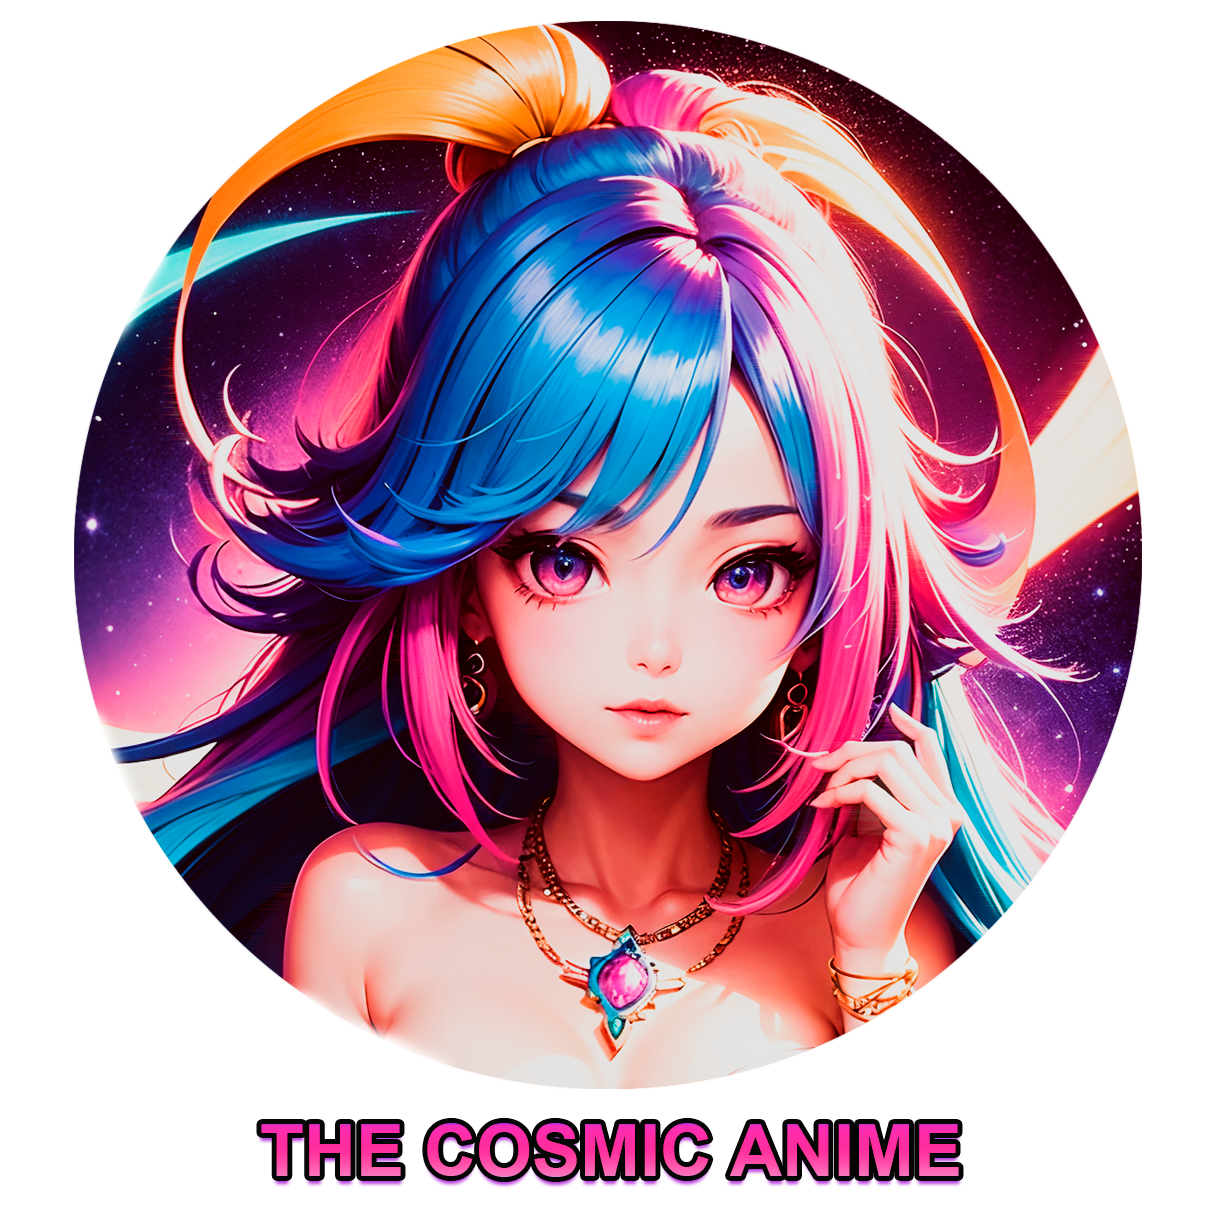 The cosmic anime